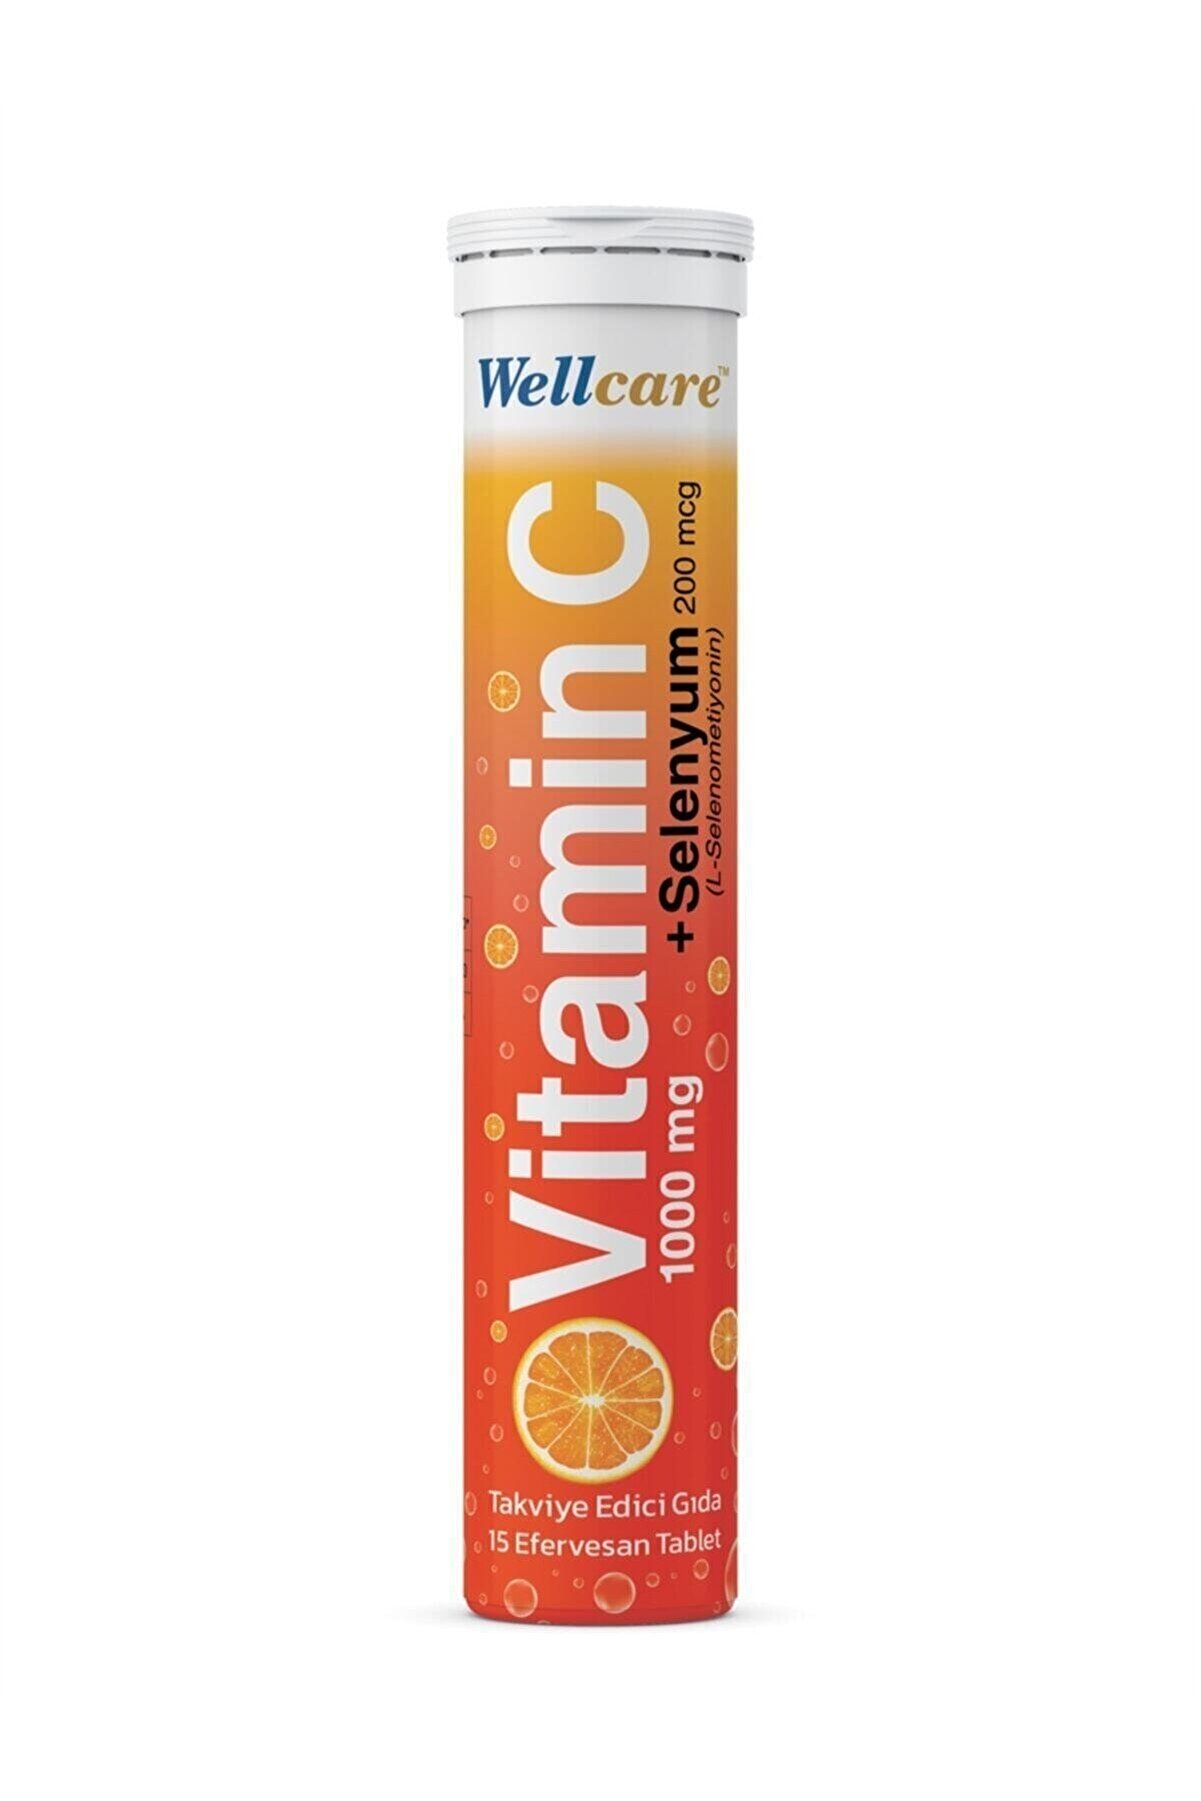 Wellcare Vitamin C 1000 Mg + Selenyum 200 Mcg 15 Efervesan Tablet